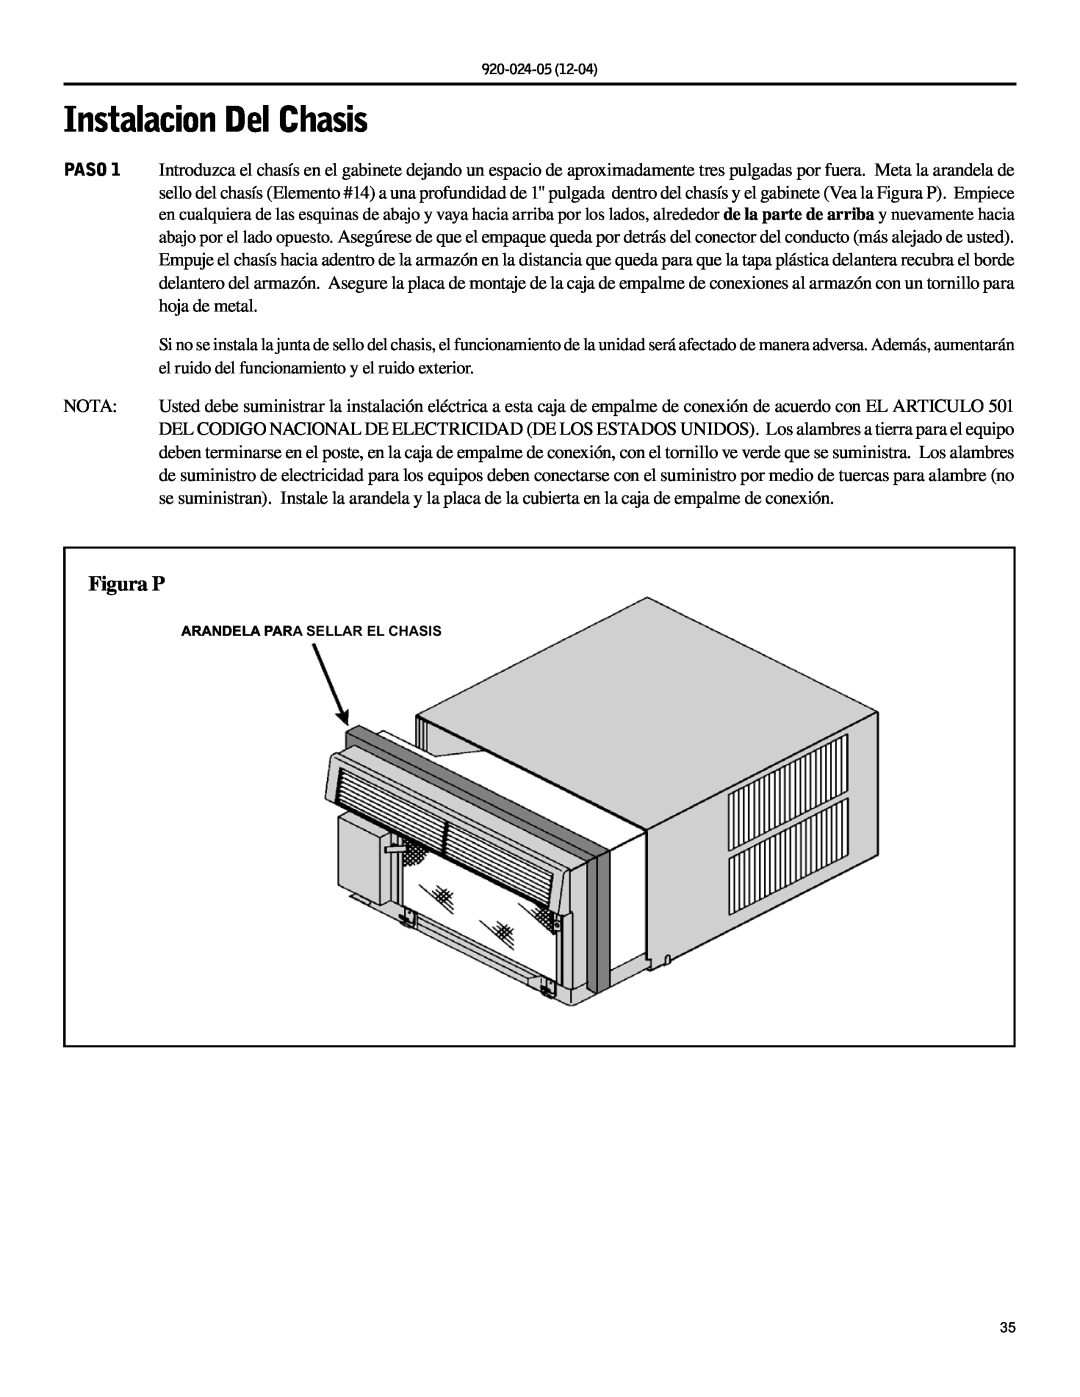 Friedrich SH20, SH15 operation manual Instalacion Del Chasis, Figura P 